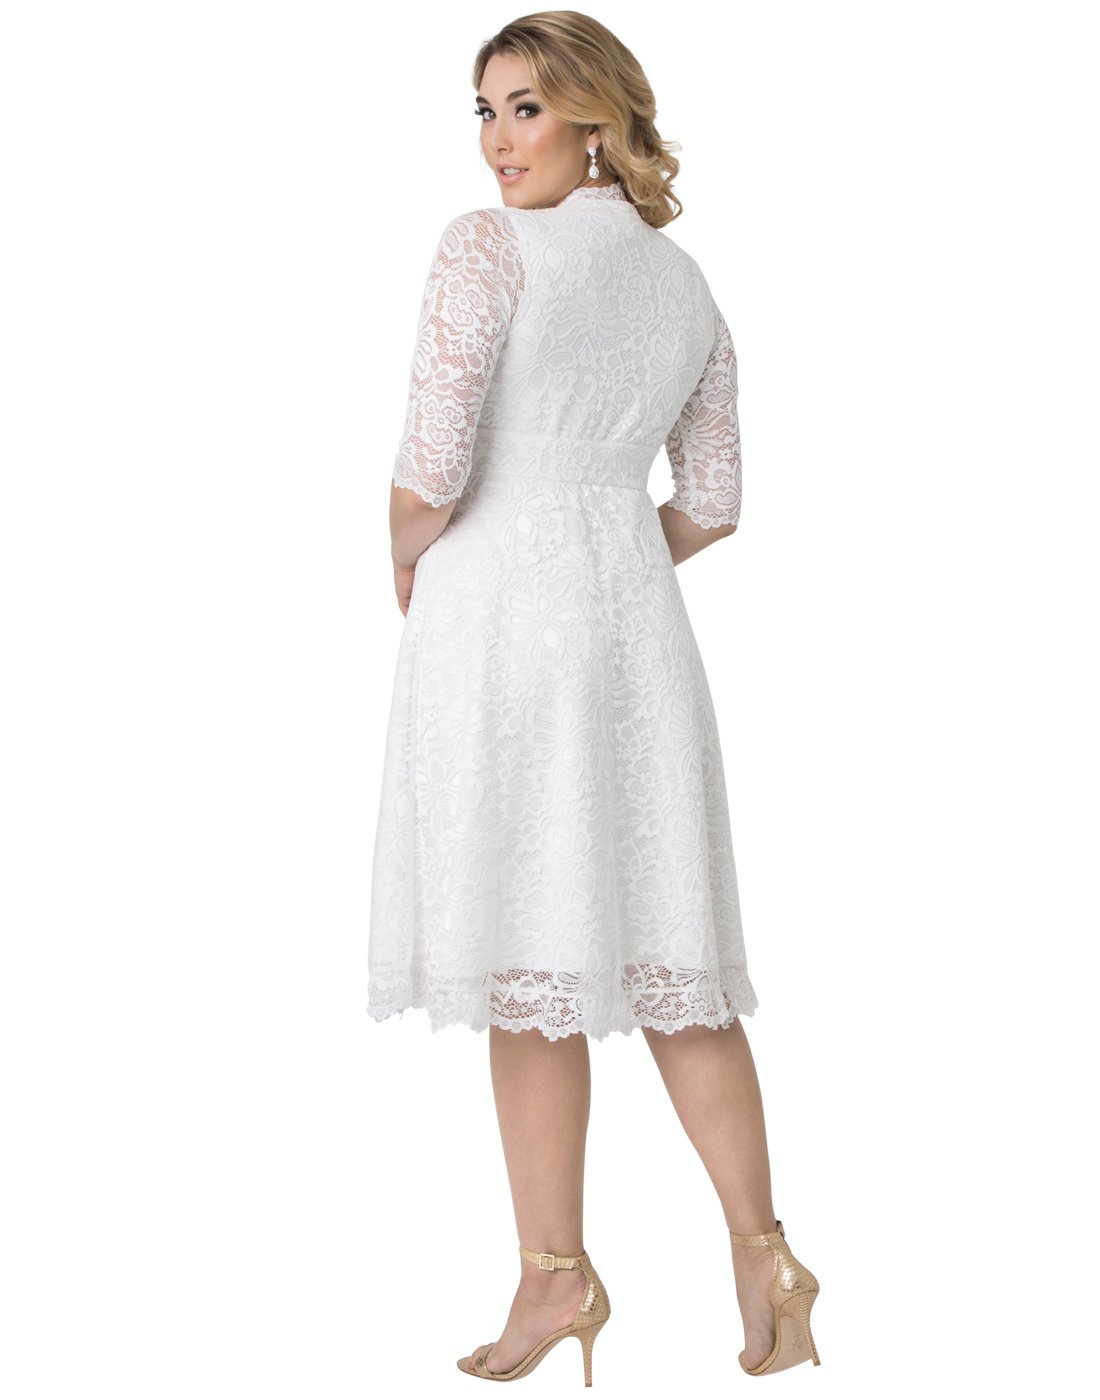 Kiyonna Women's Plus Size Belle Midi Lace Dress, Formal White Lace Dress for Bridal Shower, Cocktail Party